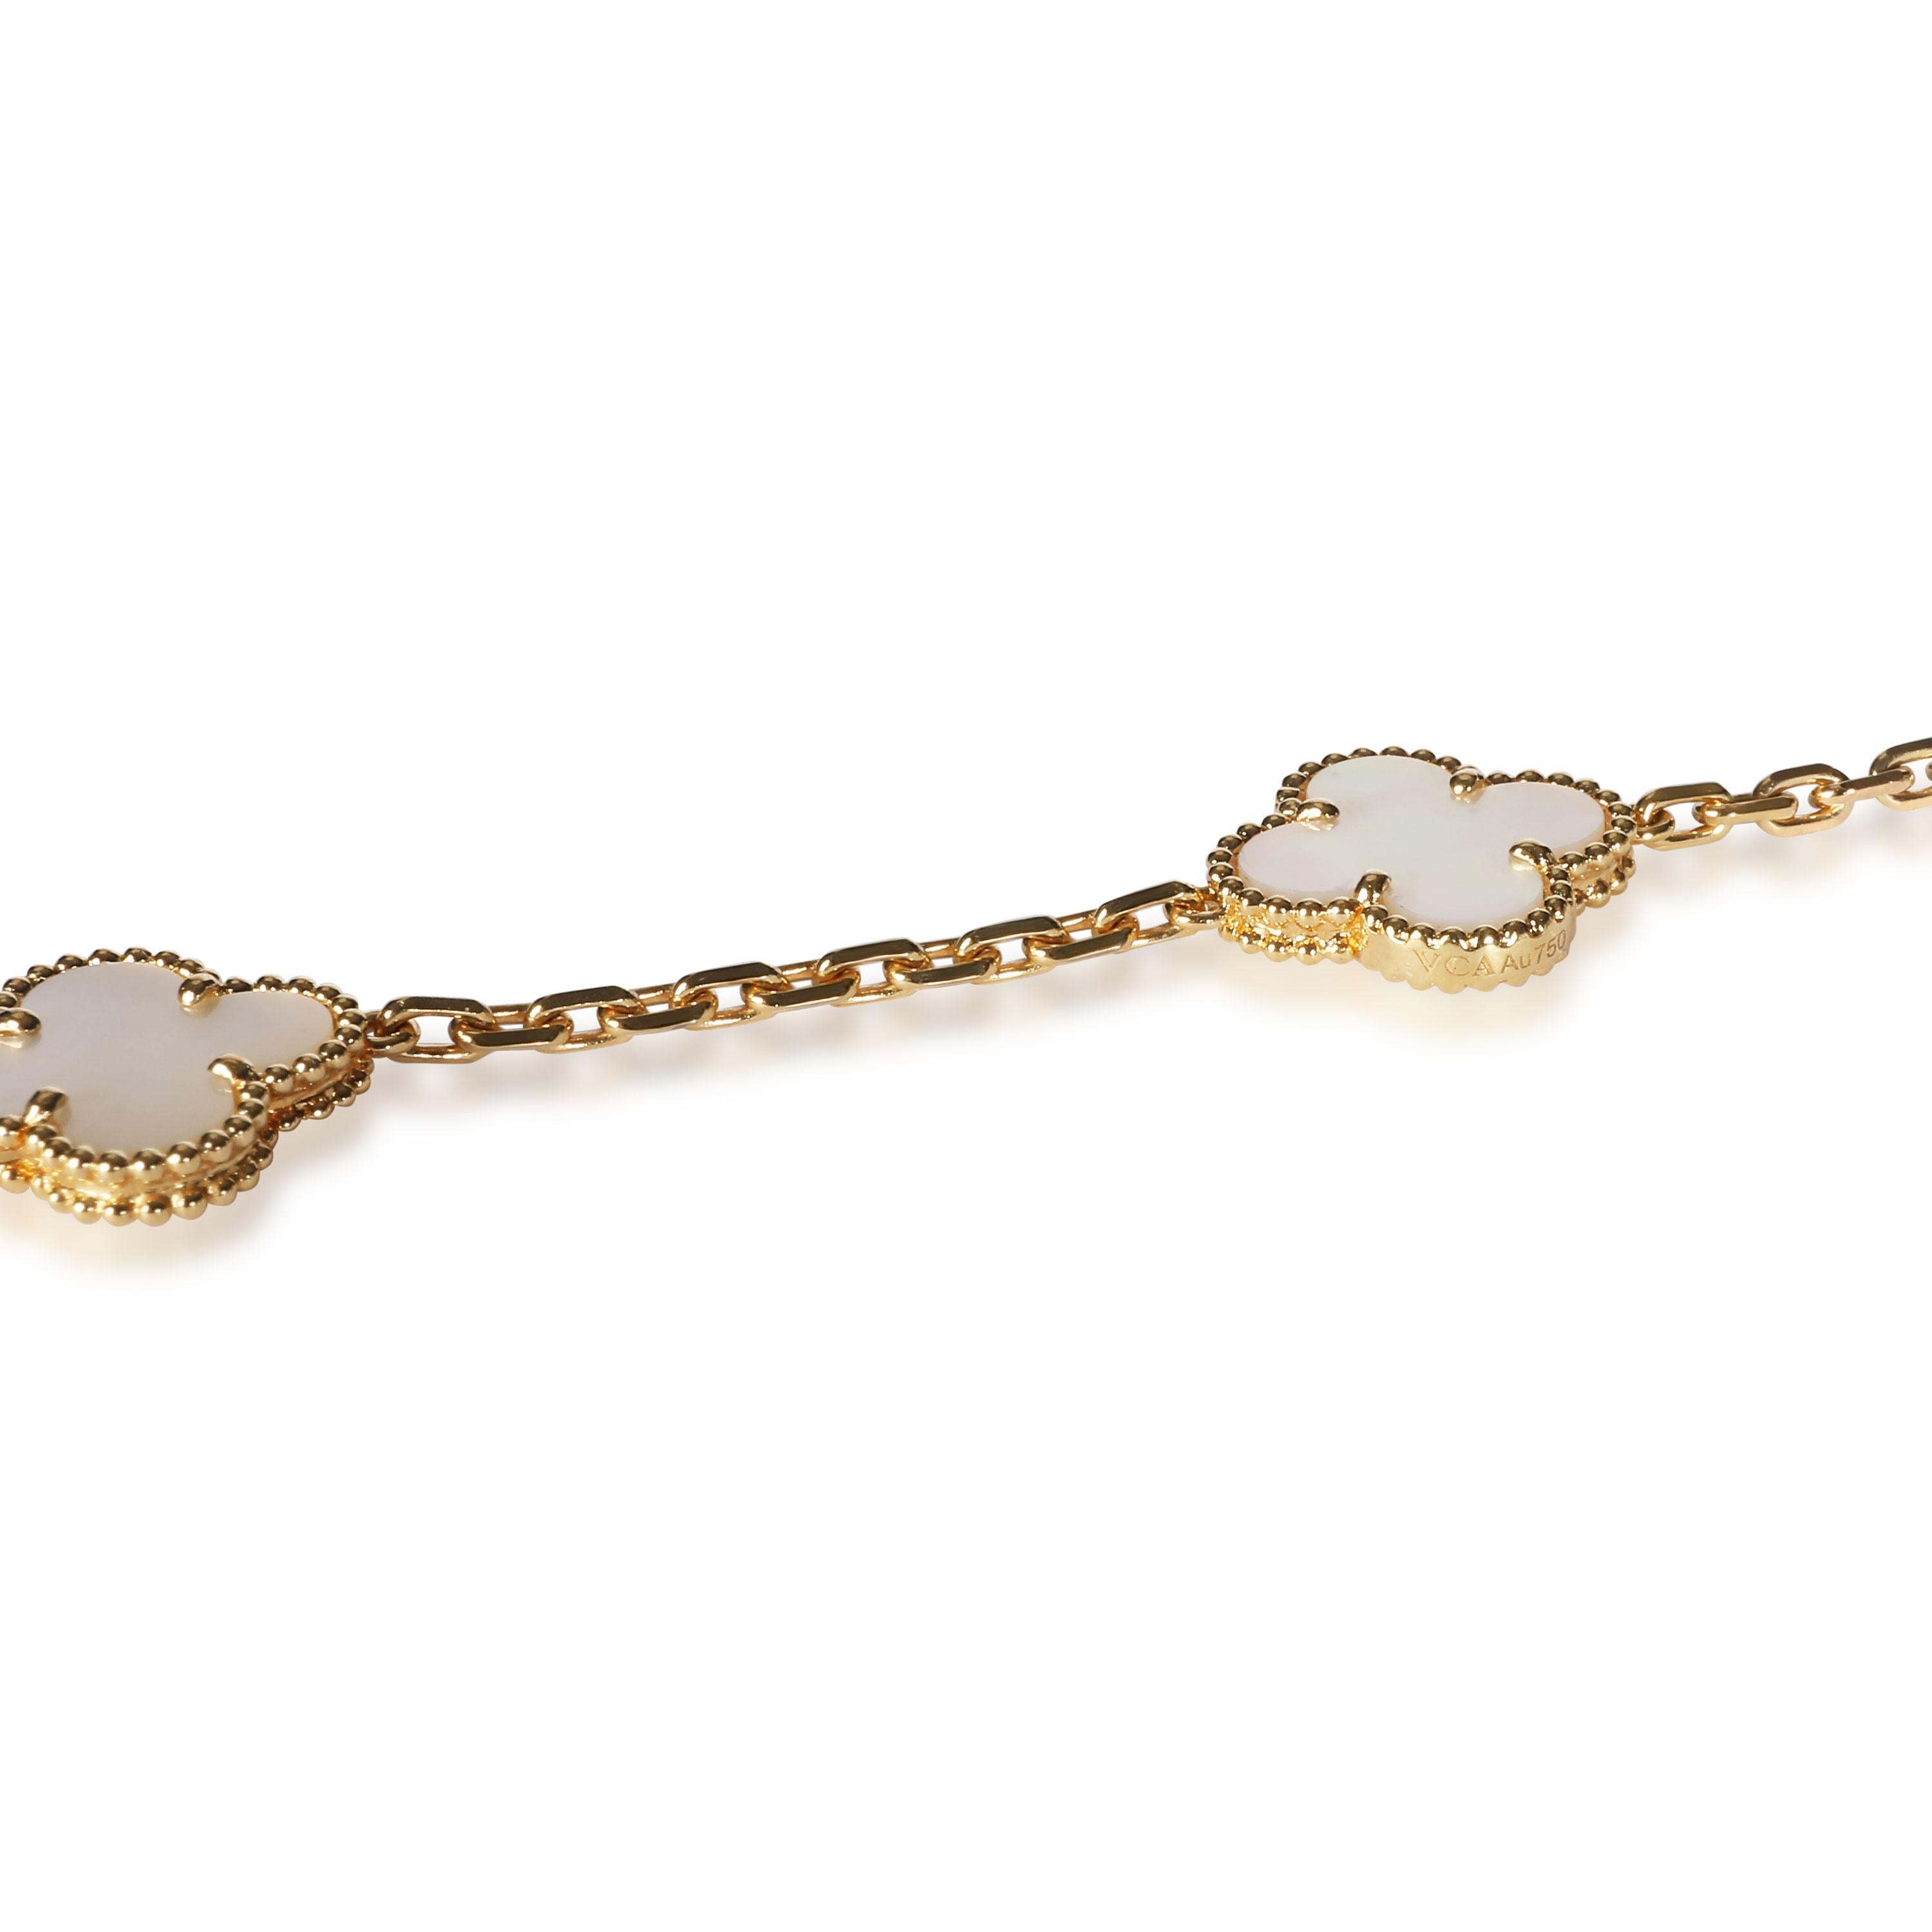 Women's Van Cleef & Arpels Vintage Alhambra Mother of Pearl Necklace in 18K Yellow Gold